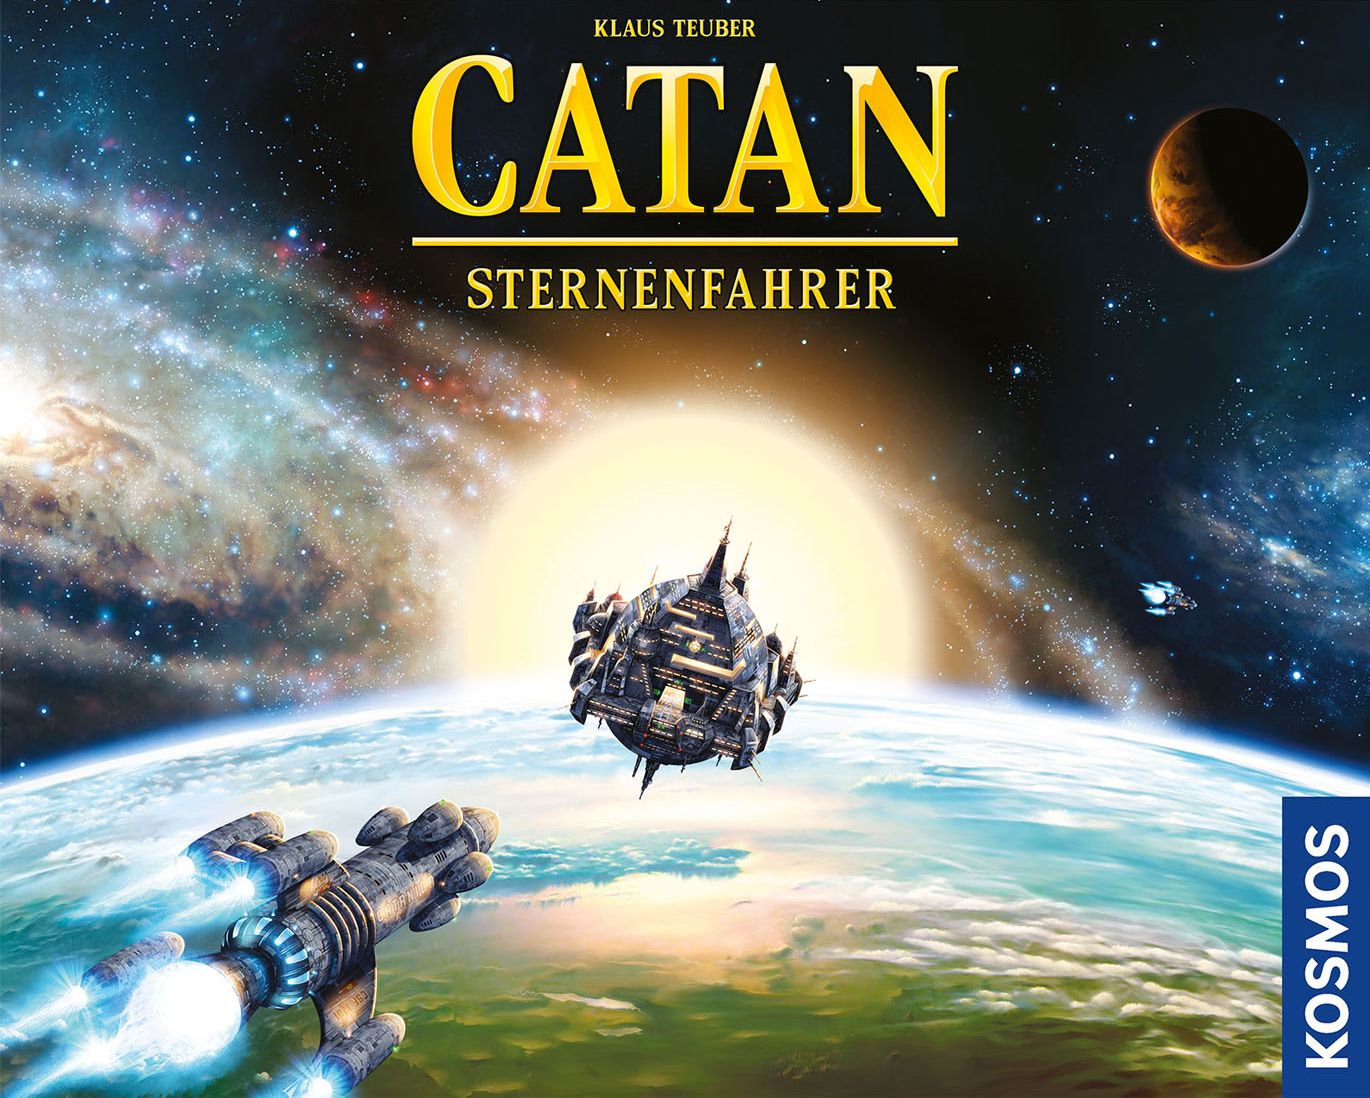 starfarers of catan